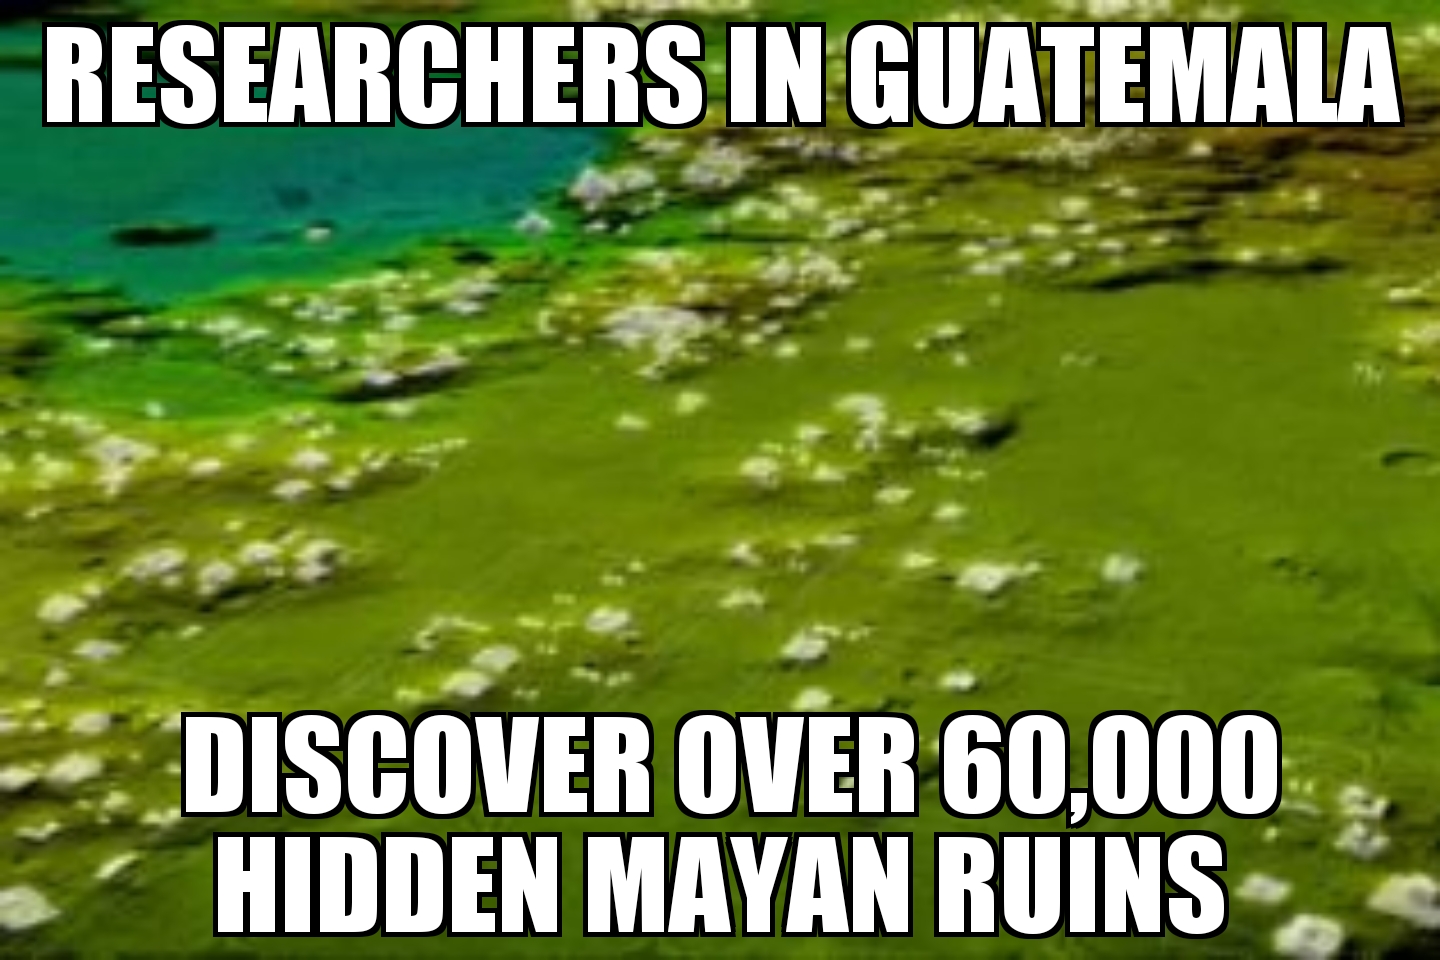 Hidden Mayan ruins uncovered